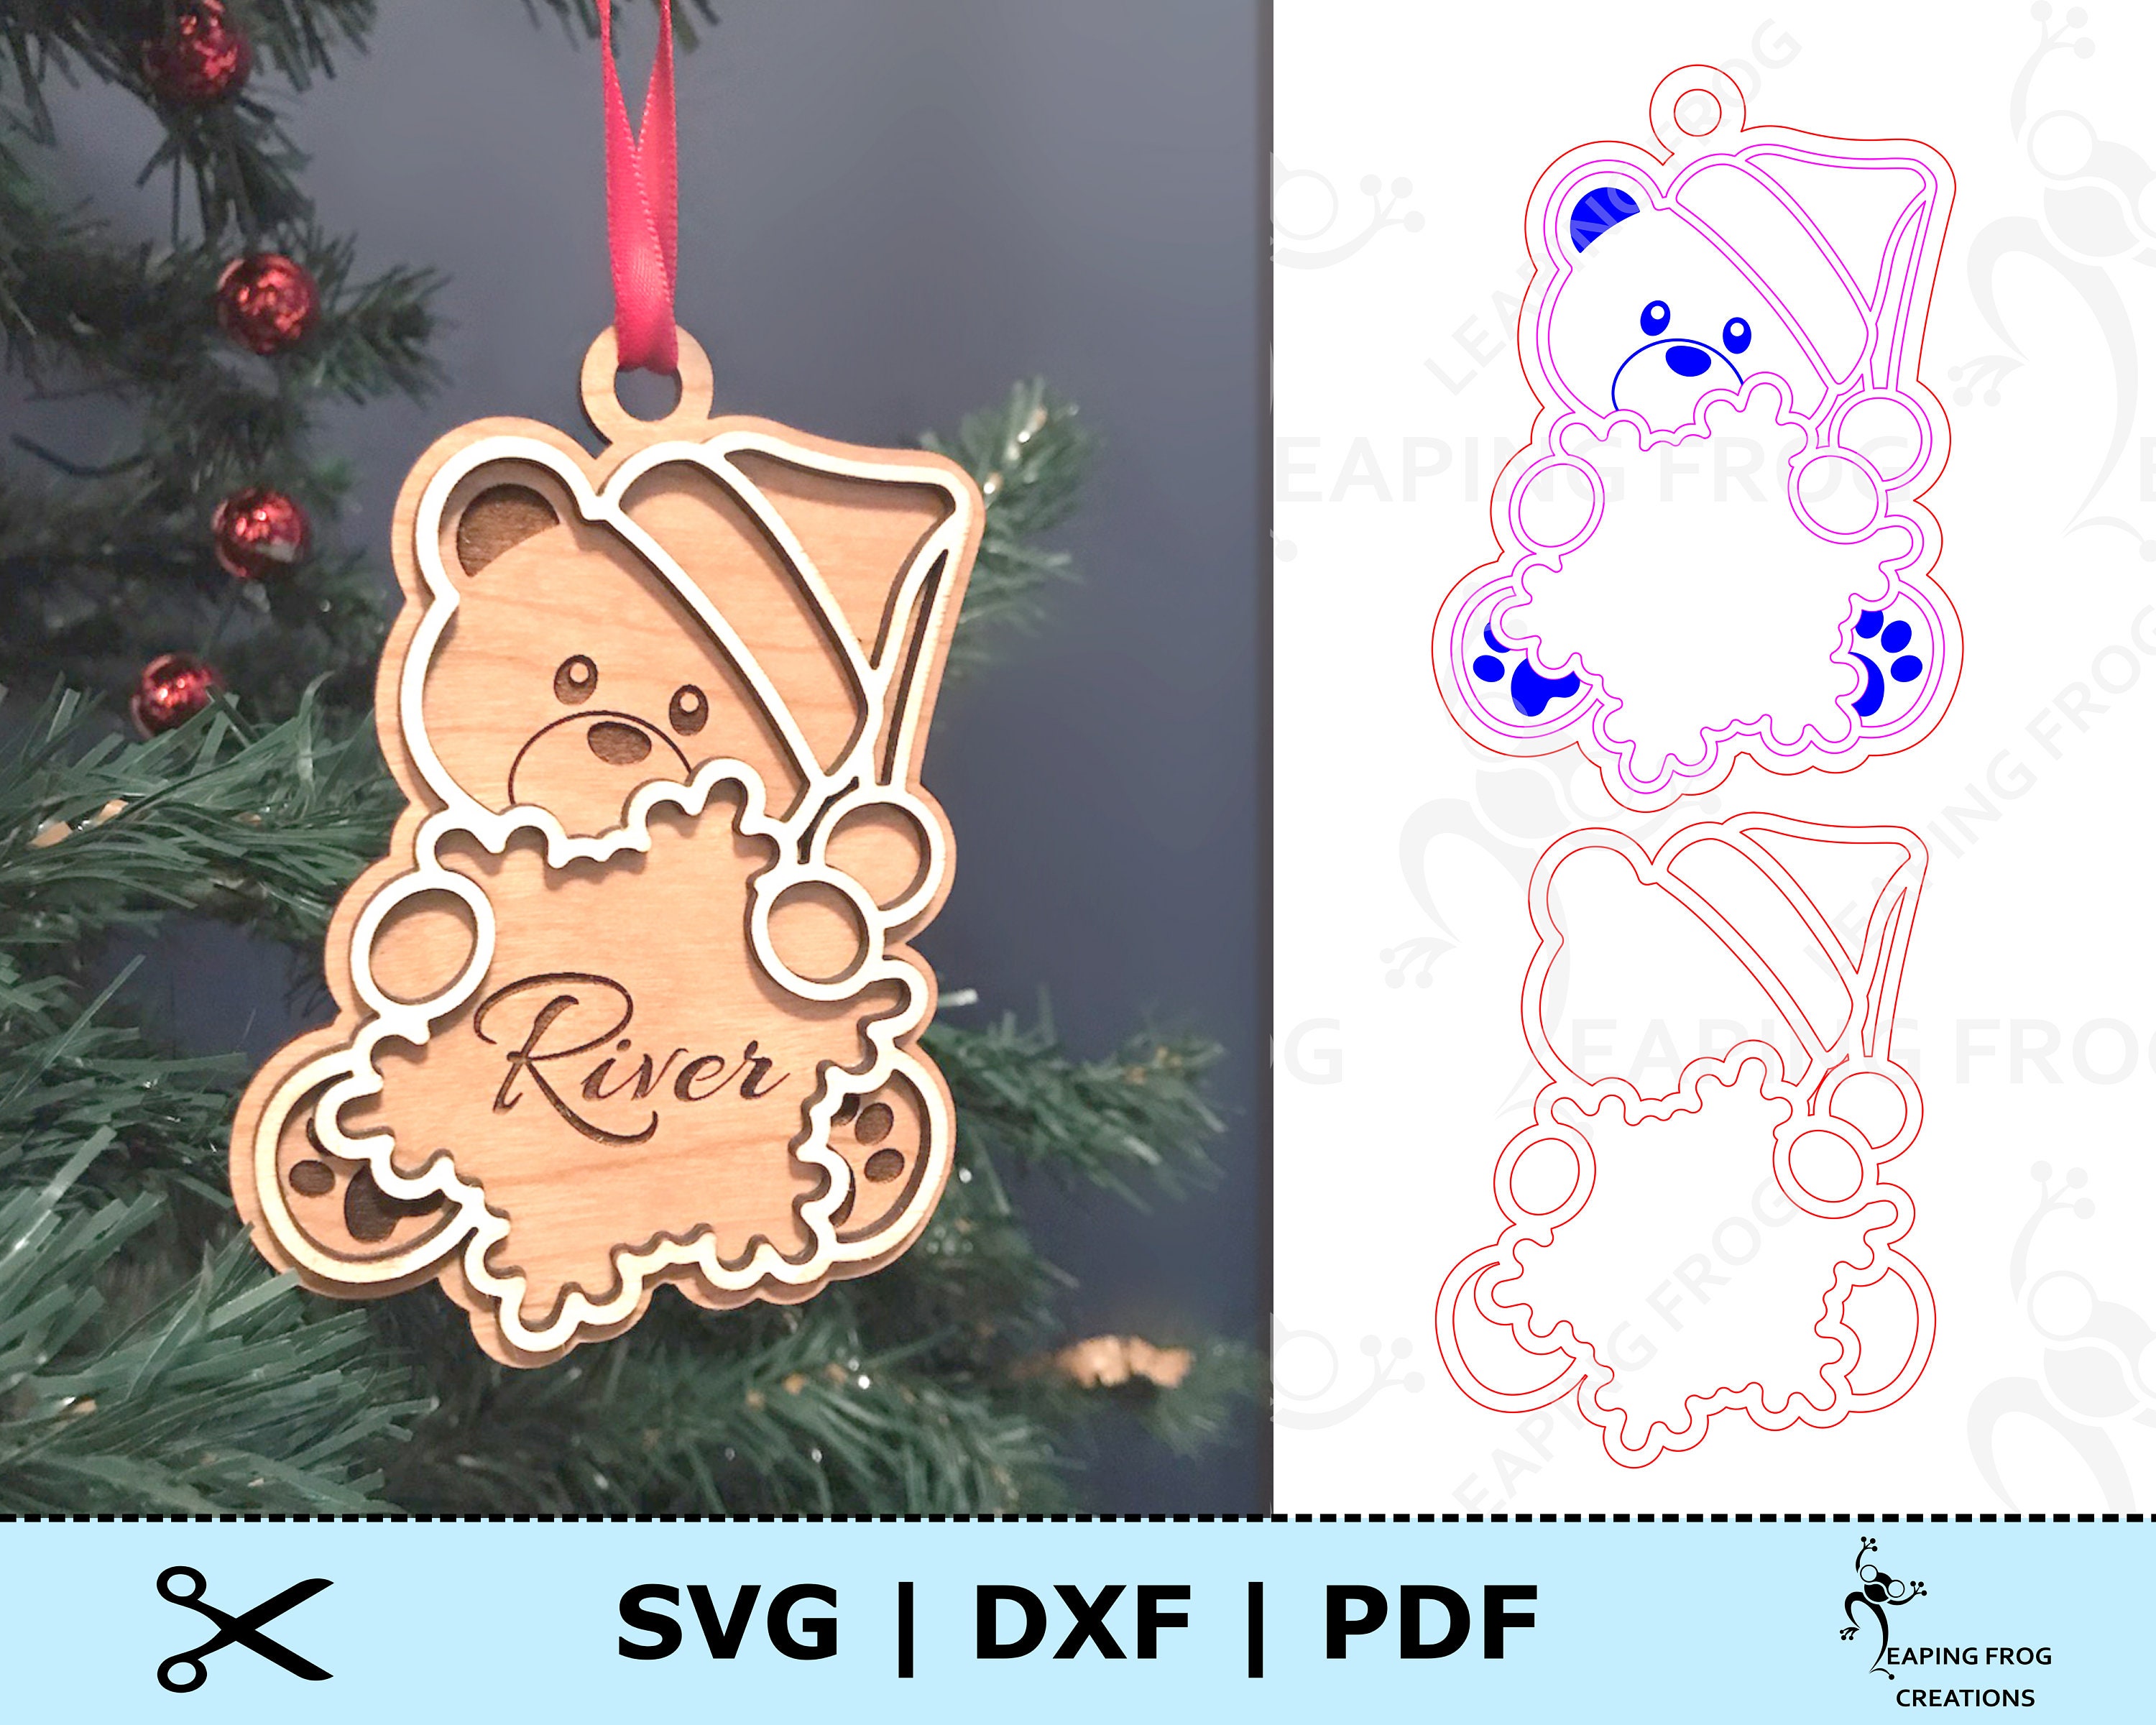 Layered Teddy Ornament SVG File Glowforge Cut File Dangle Laser Cut Tree Decor